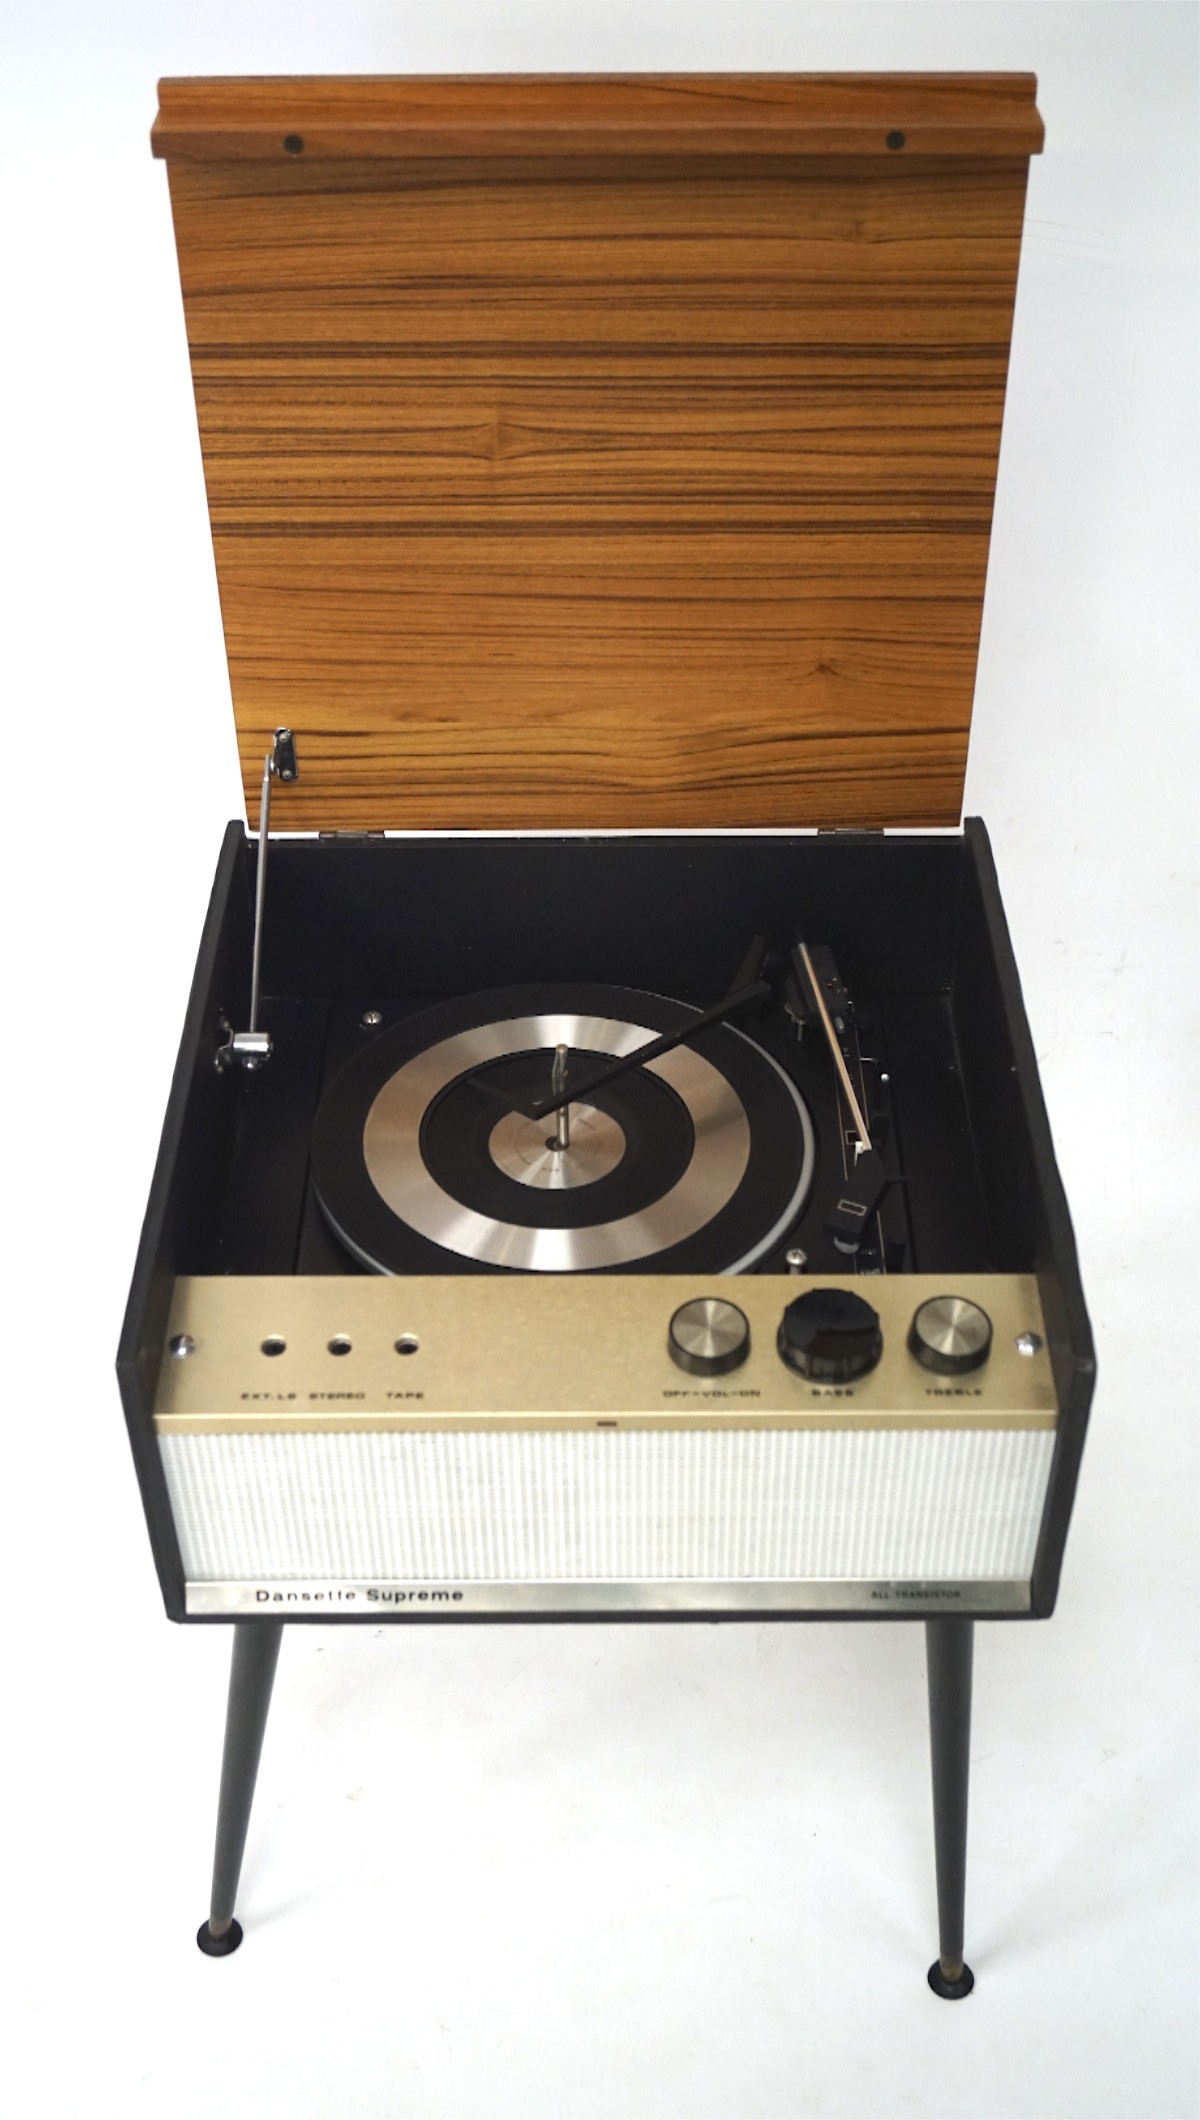 A vintage Dansette Supreme retro record deck on splayed black legs - Image 2 of 2